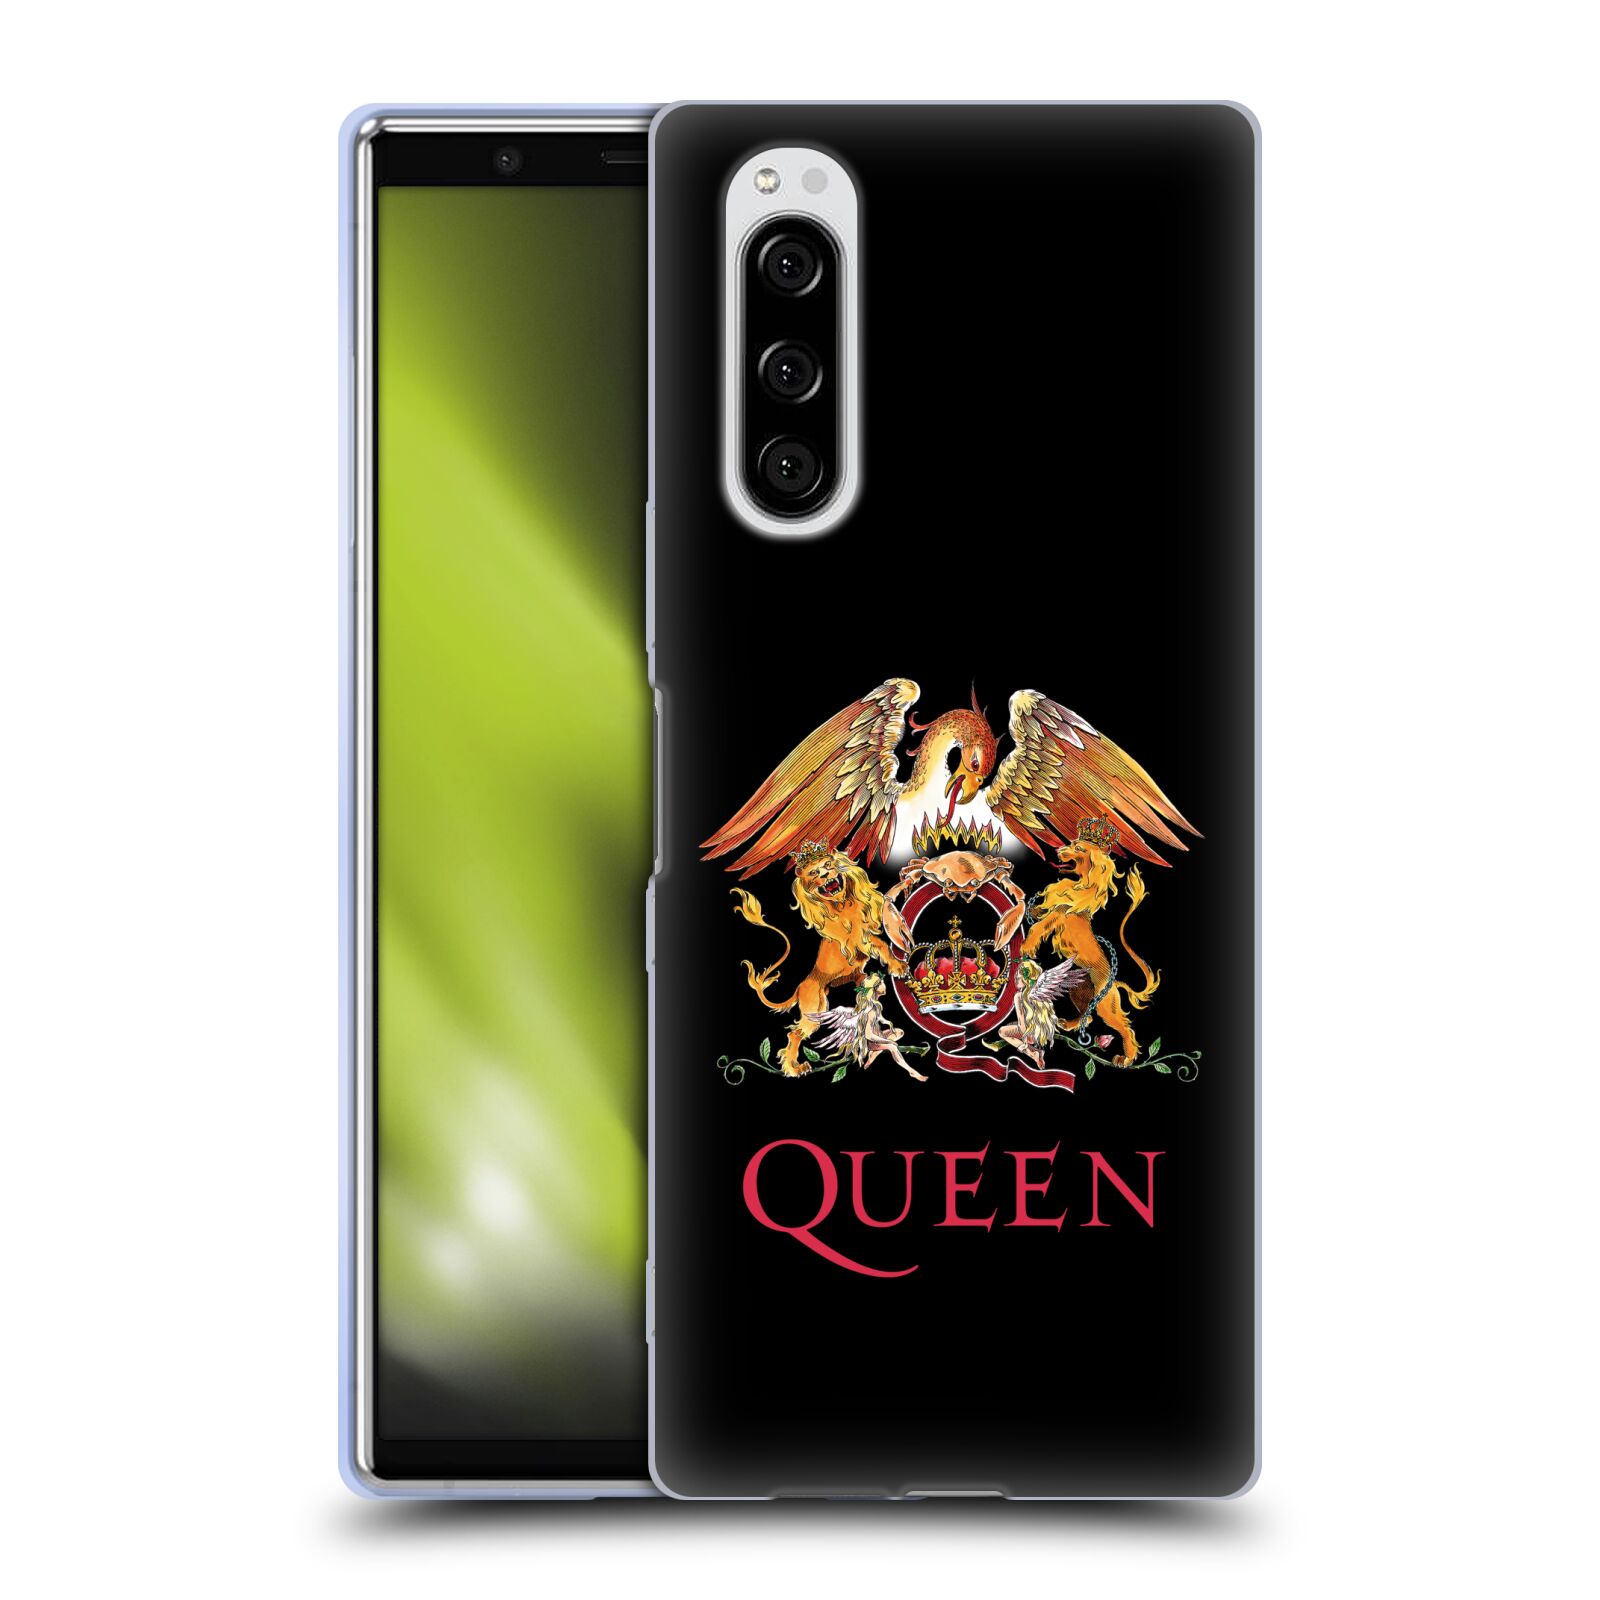 Silikonové pouzdro na mobil Sony Xperia 5 - Head Case - Queen - Logo